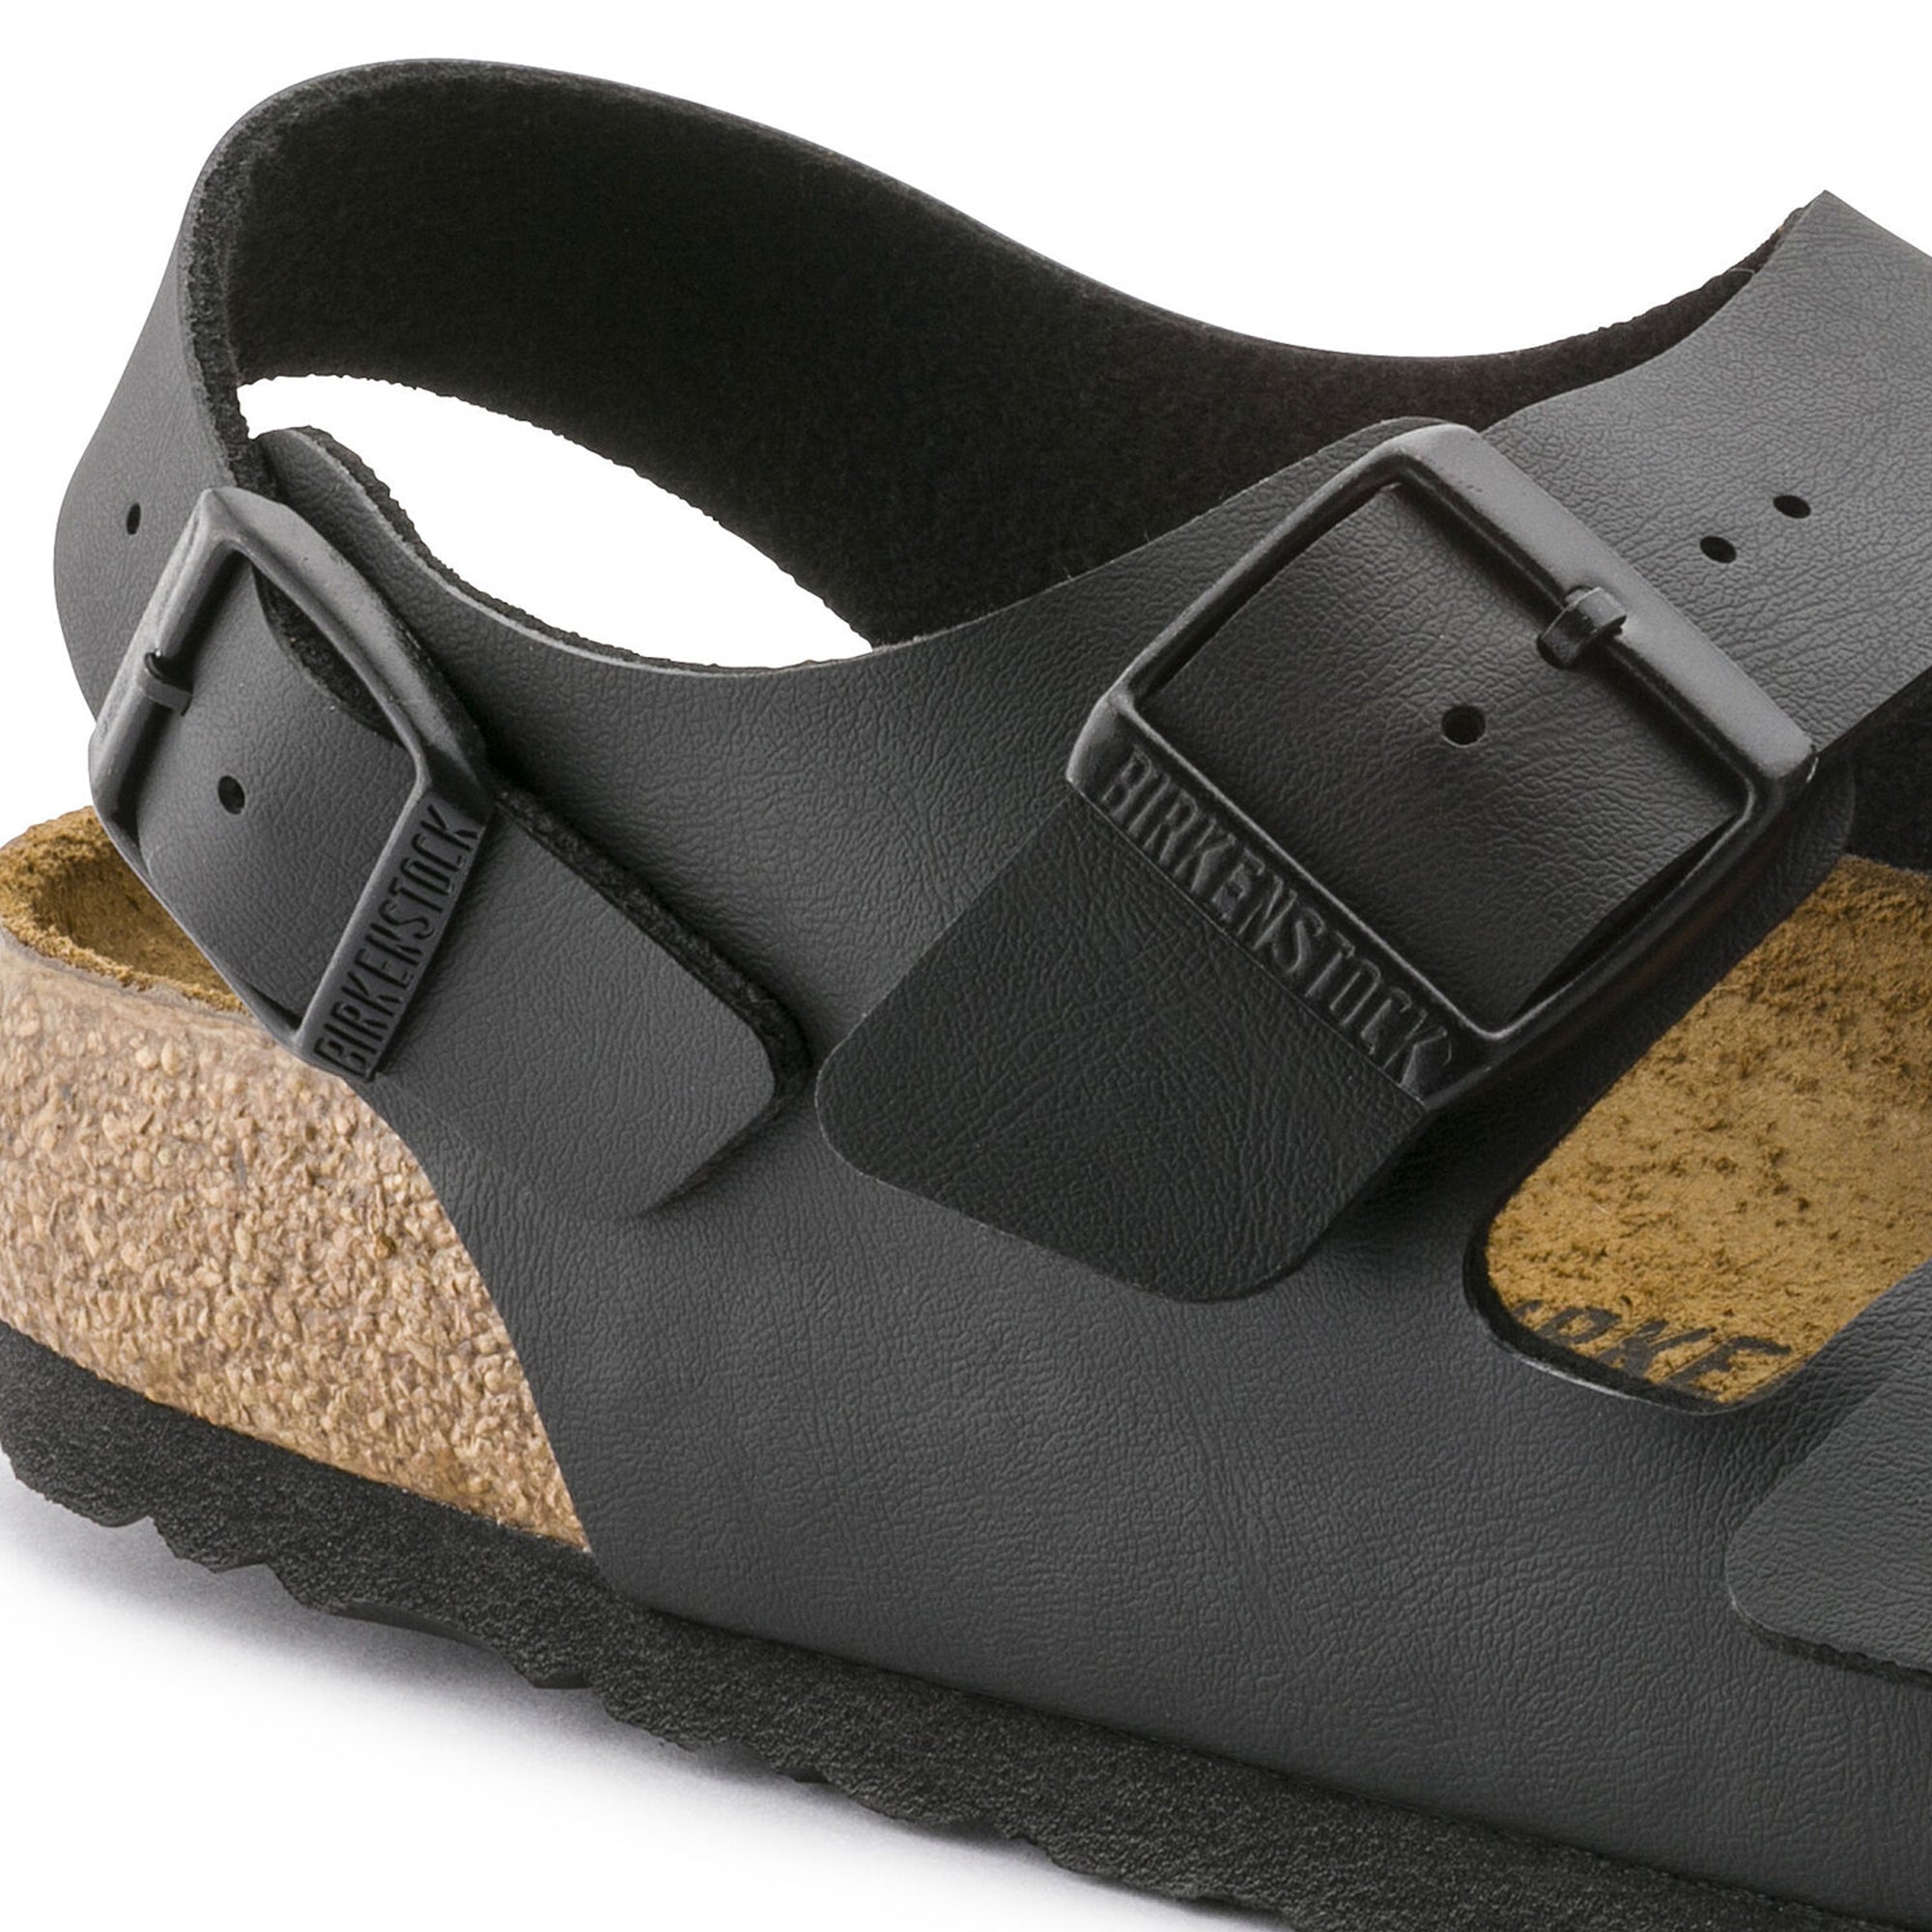 Birkenstock Milano BF Sandals - Black